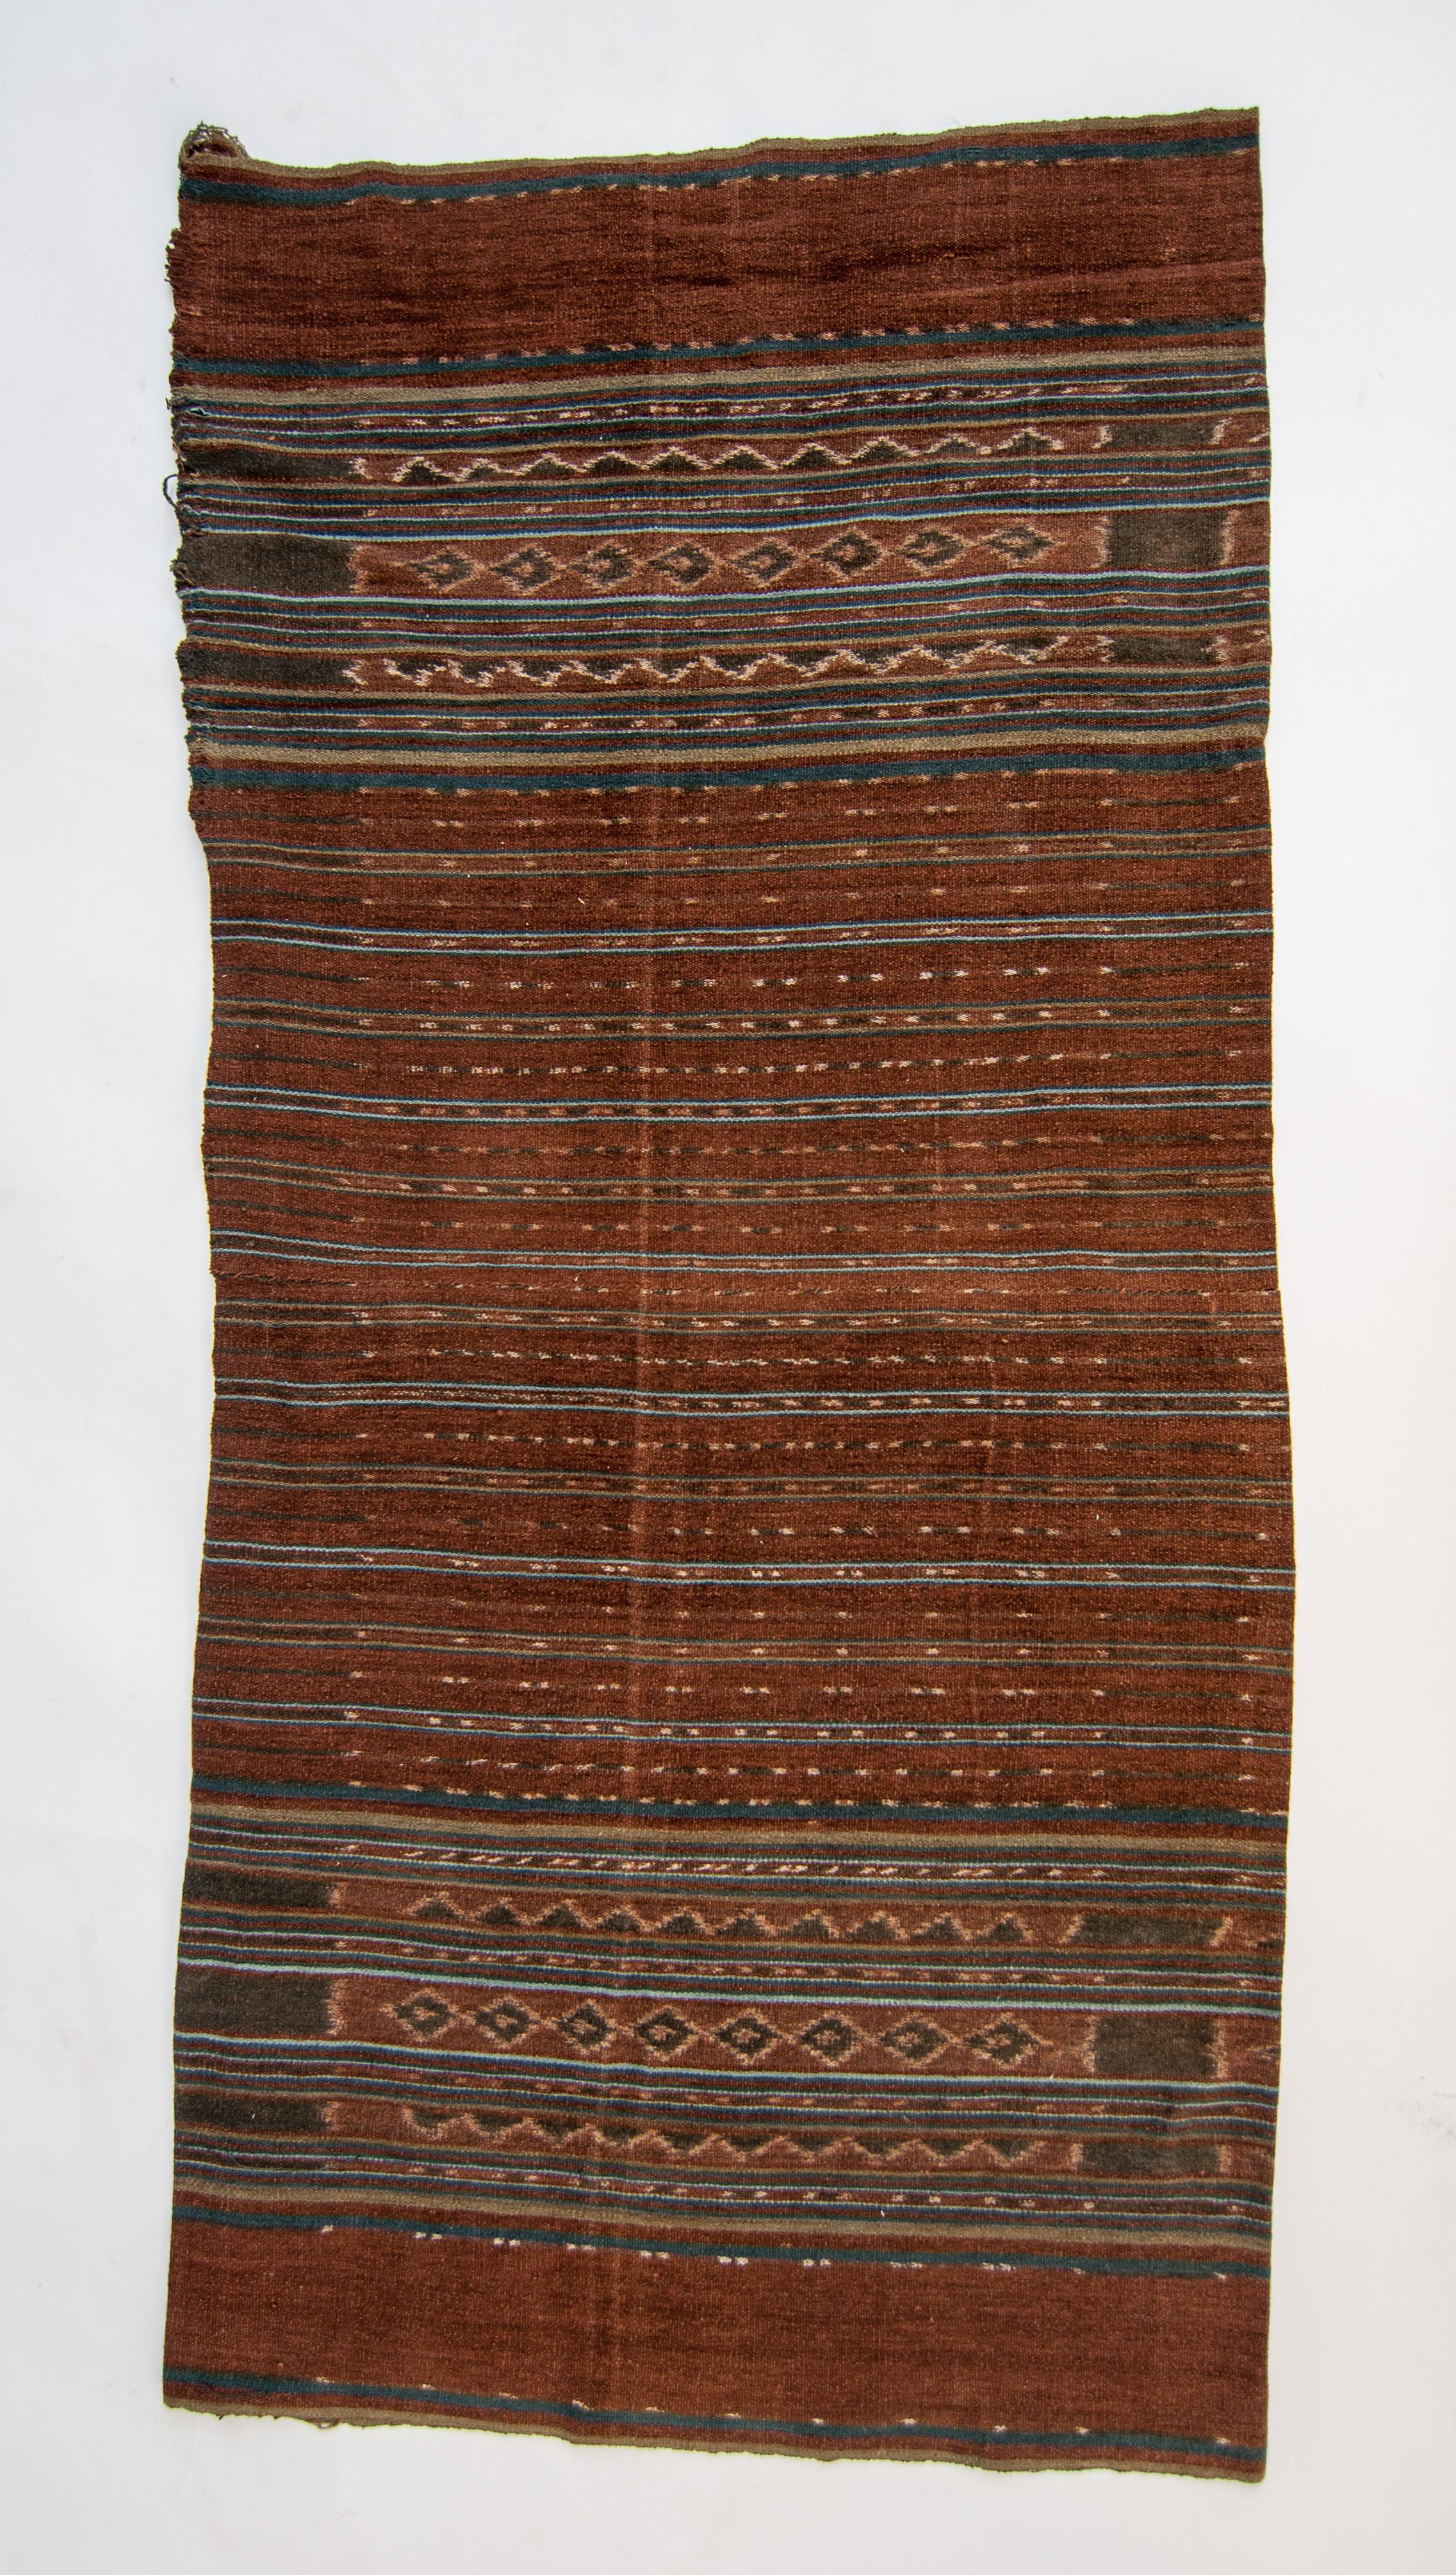 Tribal Vintage Handspun Cotton Ikat, Uncut Warp, Lembata, Indonesia, Mid-20th Century